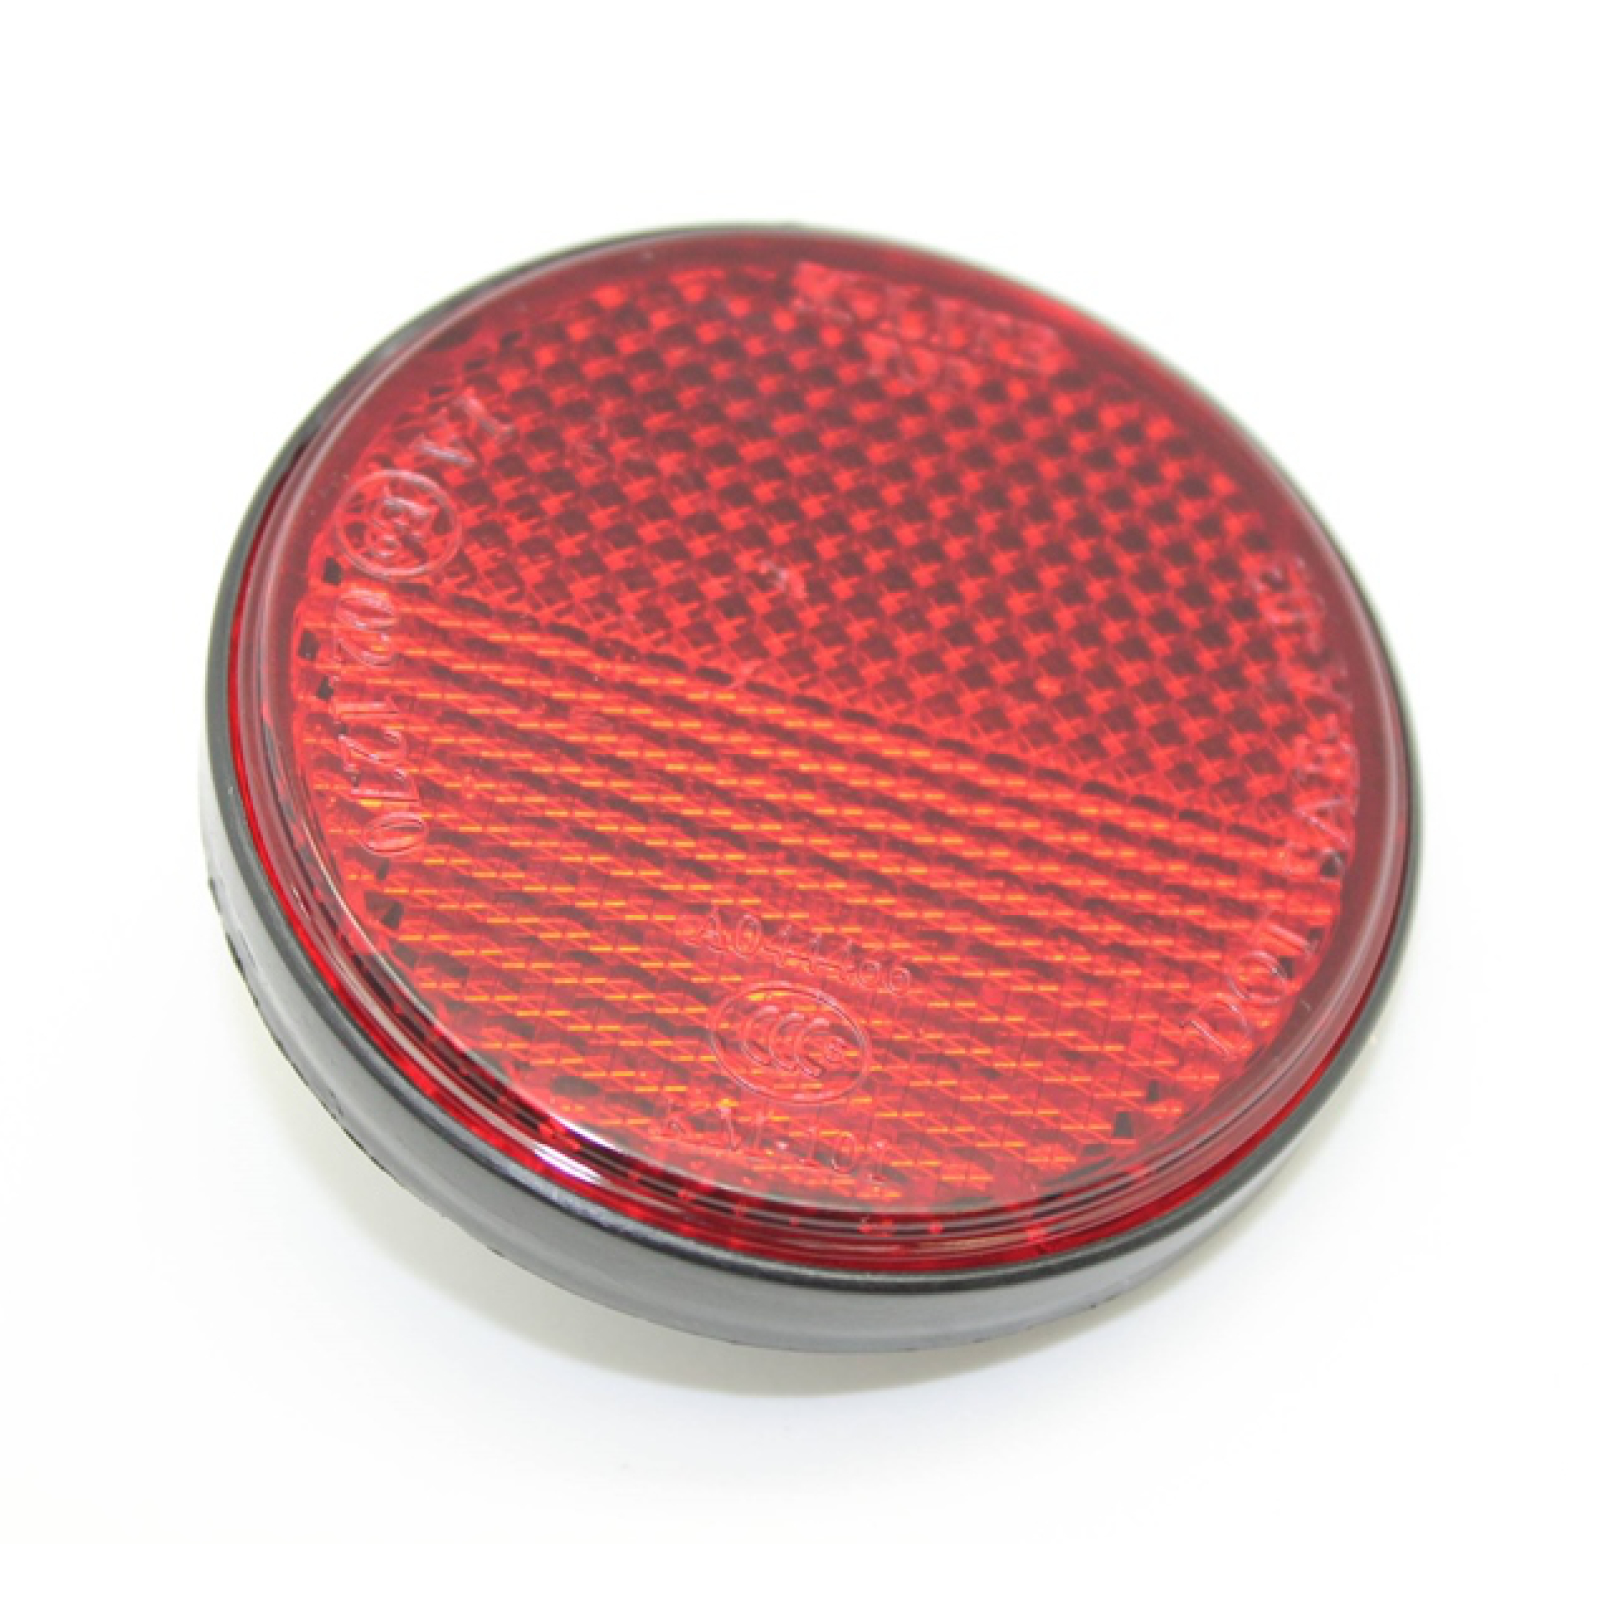 Trike25 - Reflektor, rund, Rot, 1 Stück